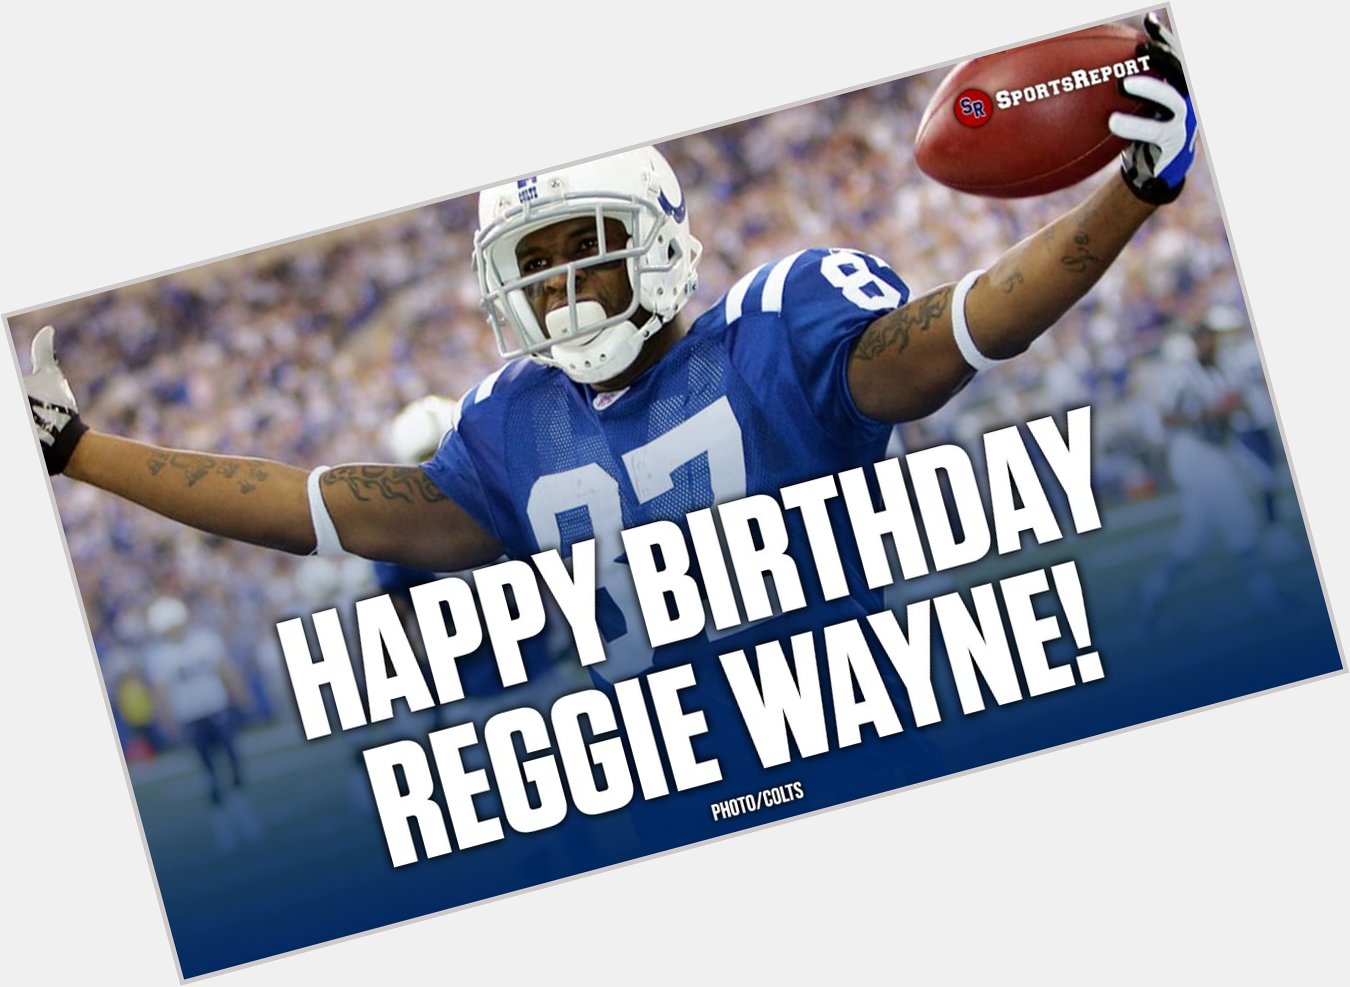  Fans, let\s wish legend Reggie Wayne a Happy Birthday! GO COLTS!! 